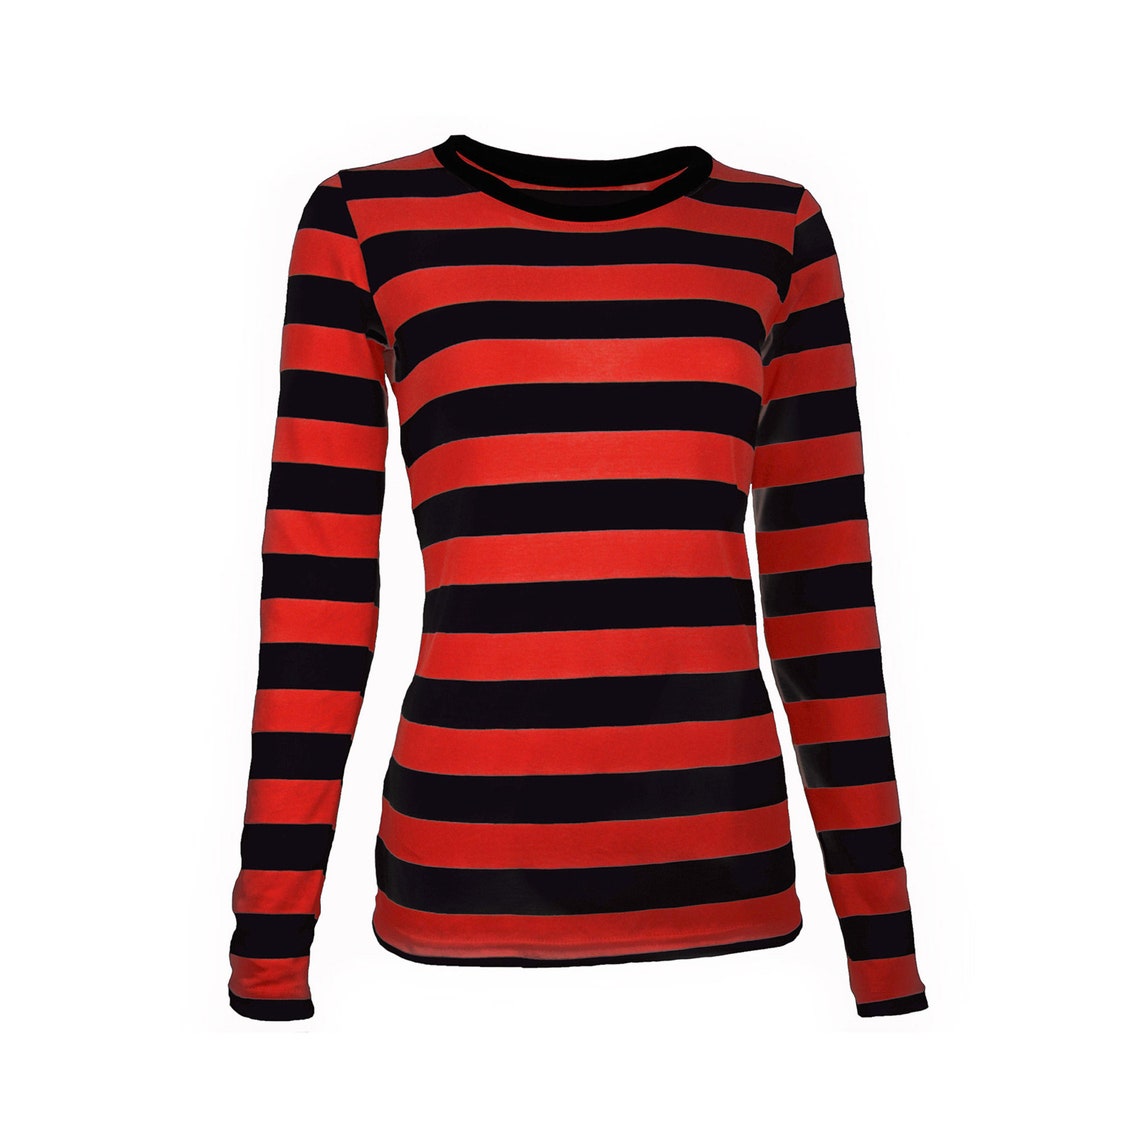 Women's Long Sleeve Black & Red Striped Shirt - Etsy